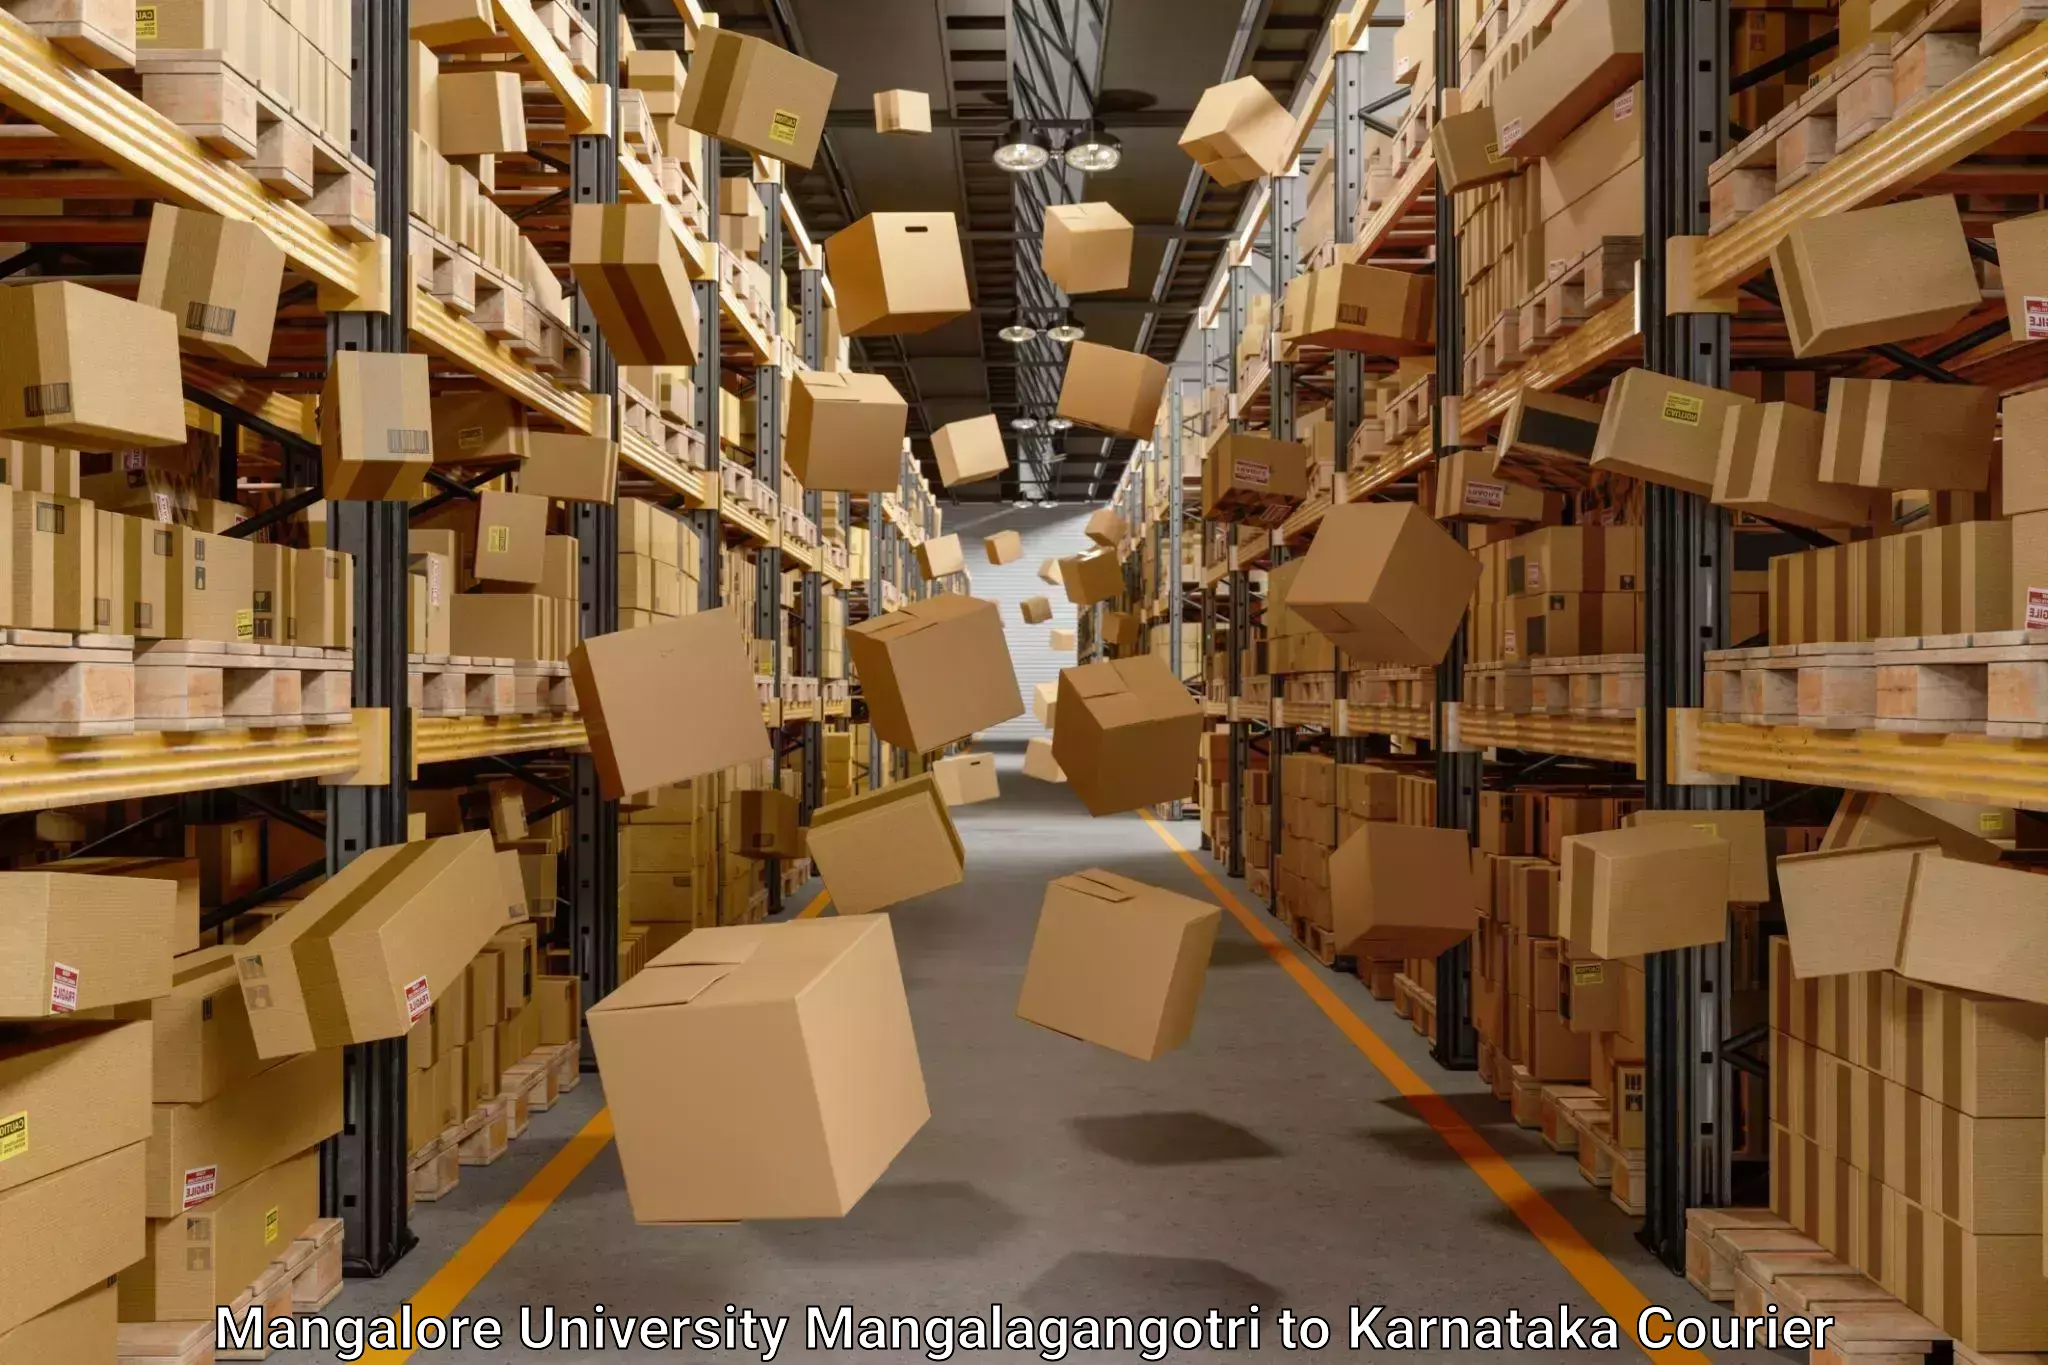 Home moving and storage Mangalore University Mangalagangotri to Mangalore